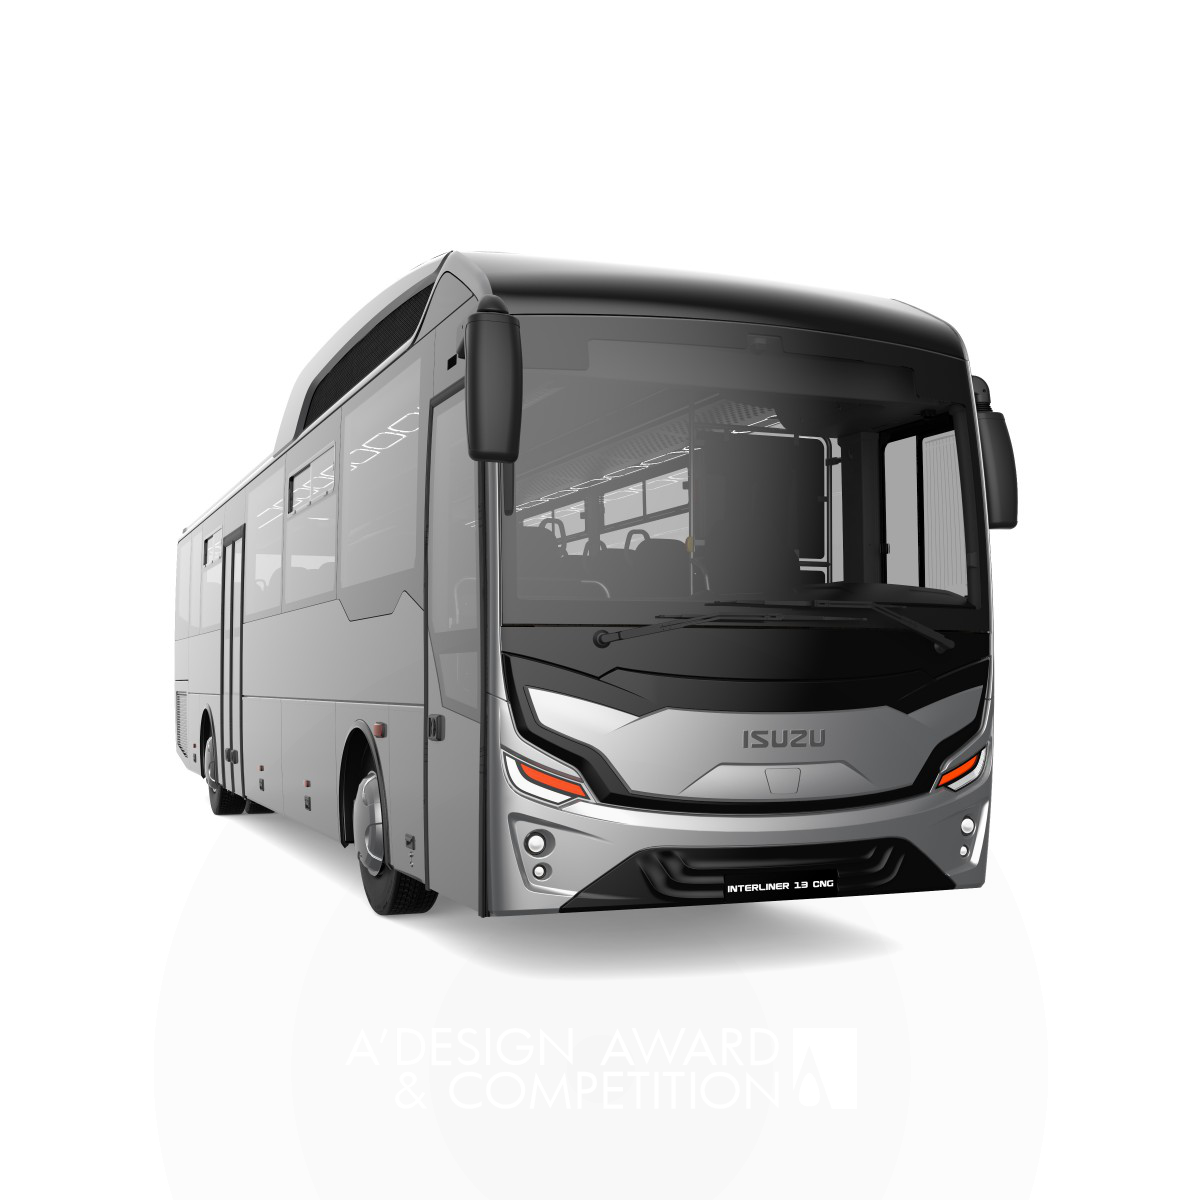 Anadolu Isuzu Introduces the Interliner: A Game-Changing 13m CNG Bus